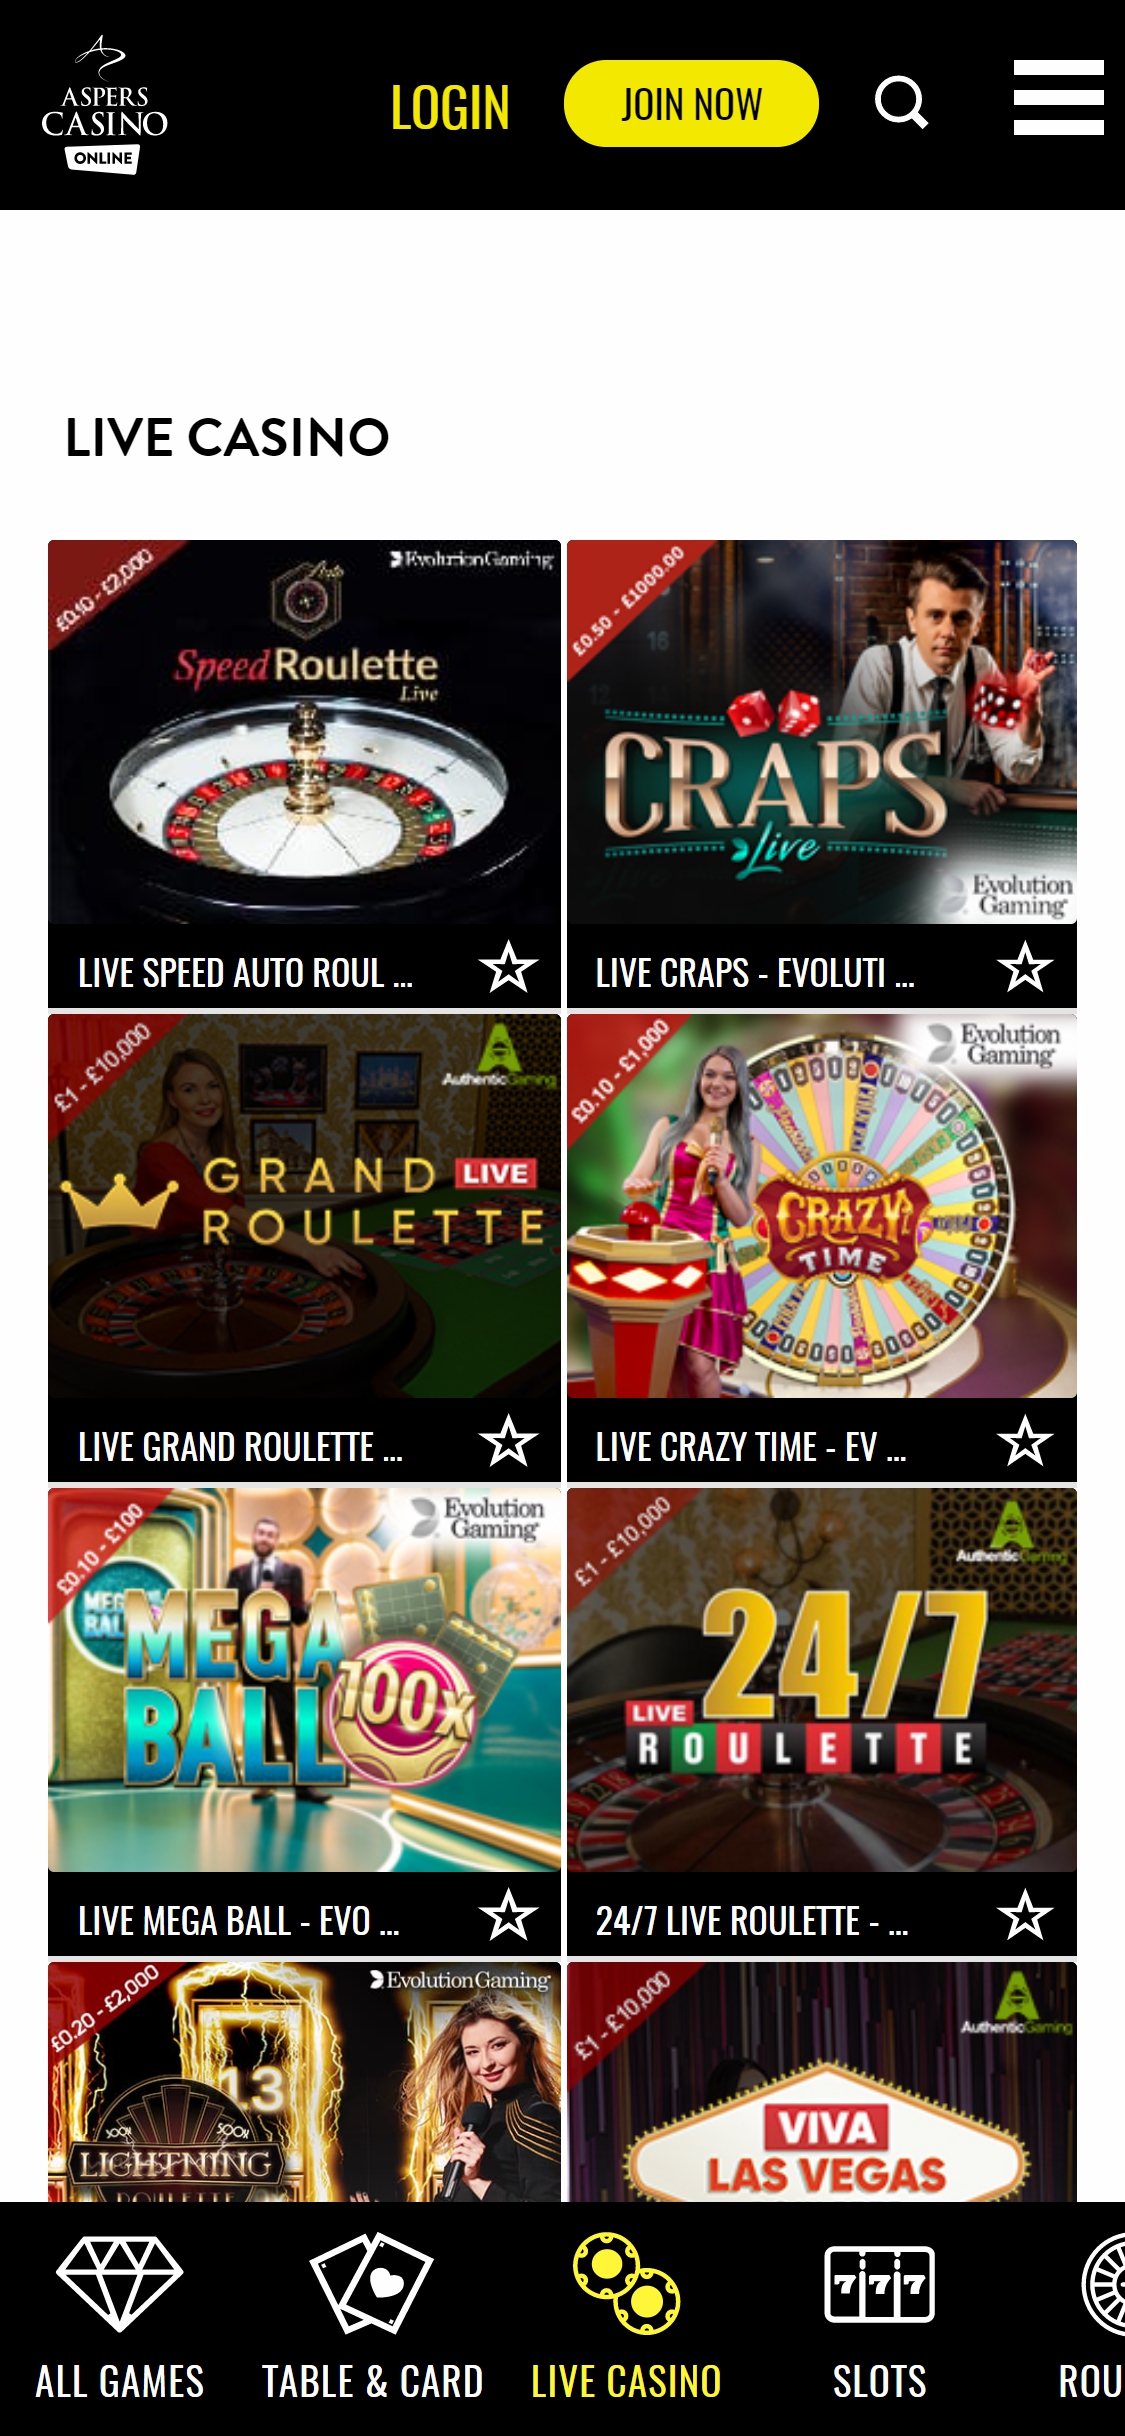 Aspers Casino Mobile Live Dealer Games Review